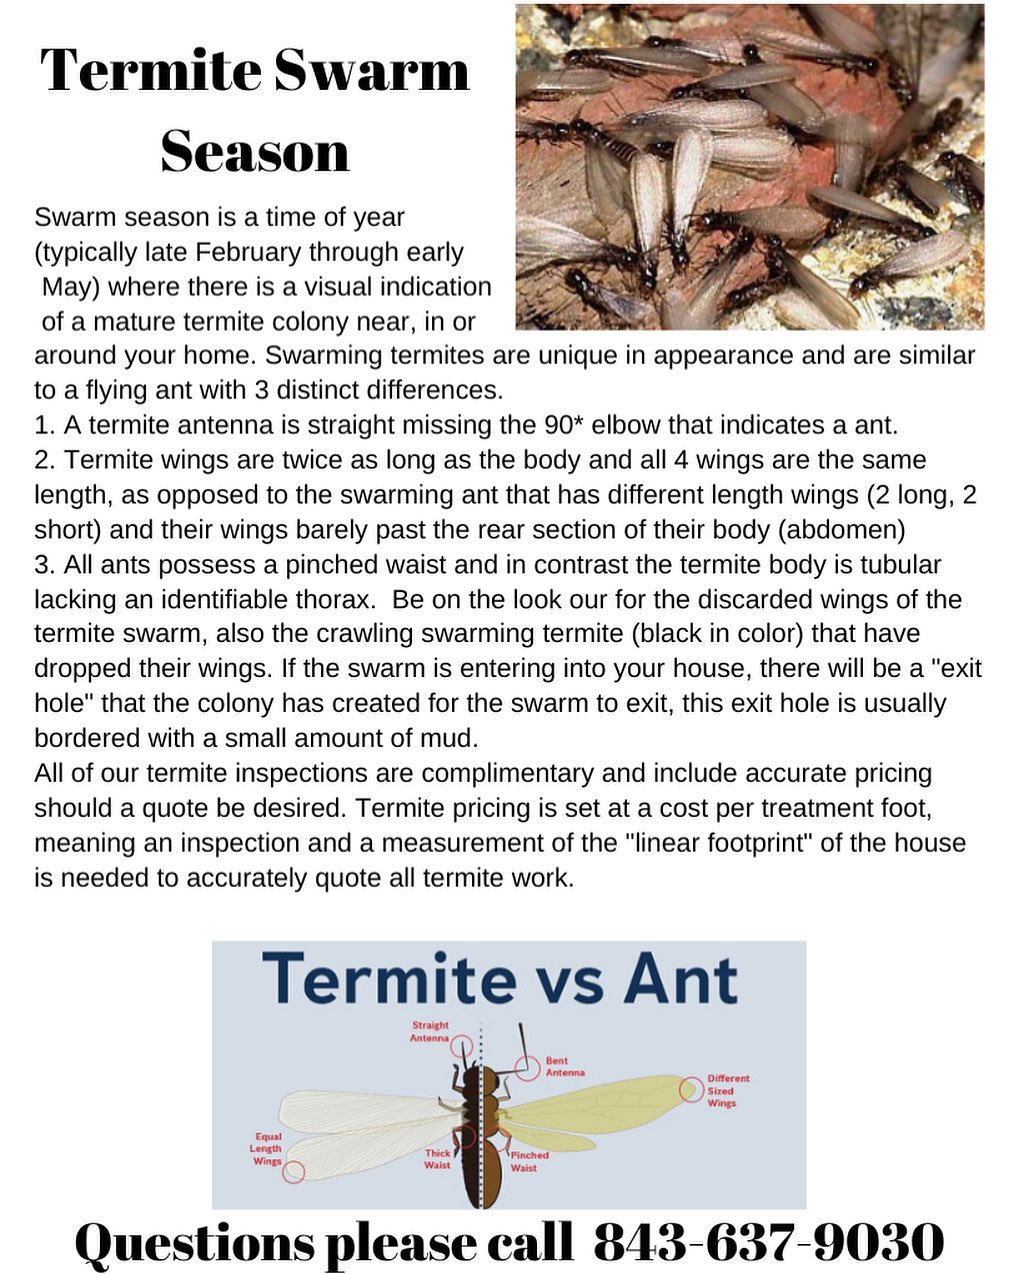 Termite Swarm Season Treatment